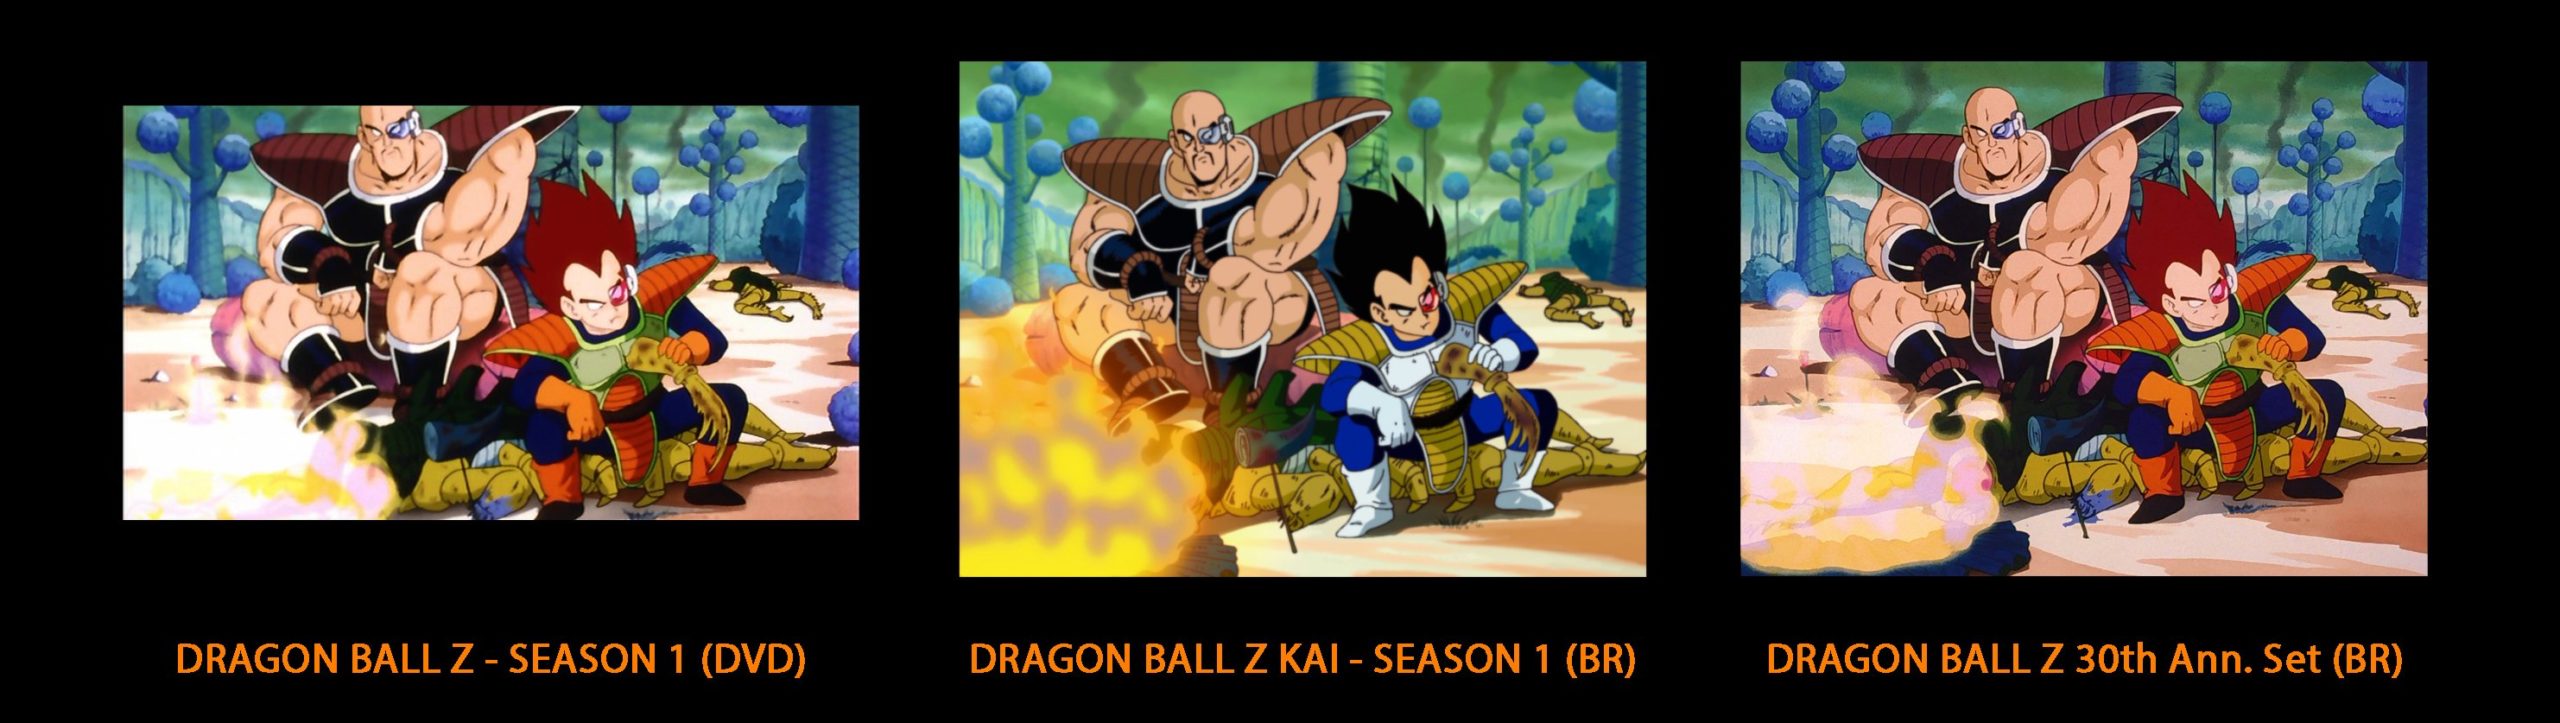 dragon ball z kai season 5 episode 1 watch free english